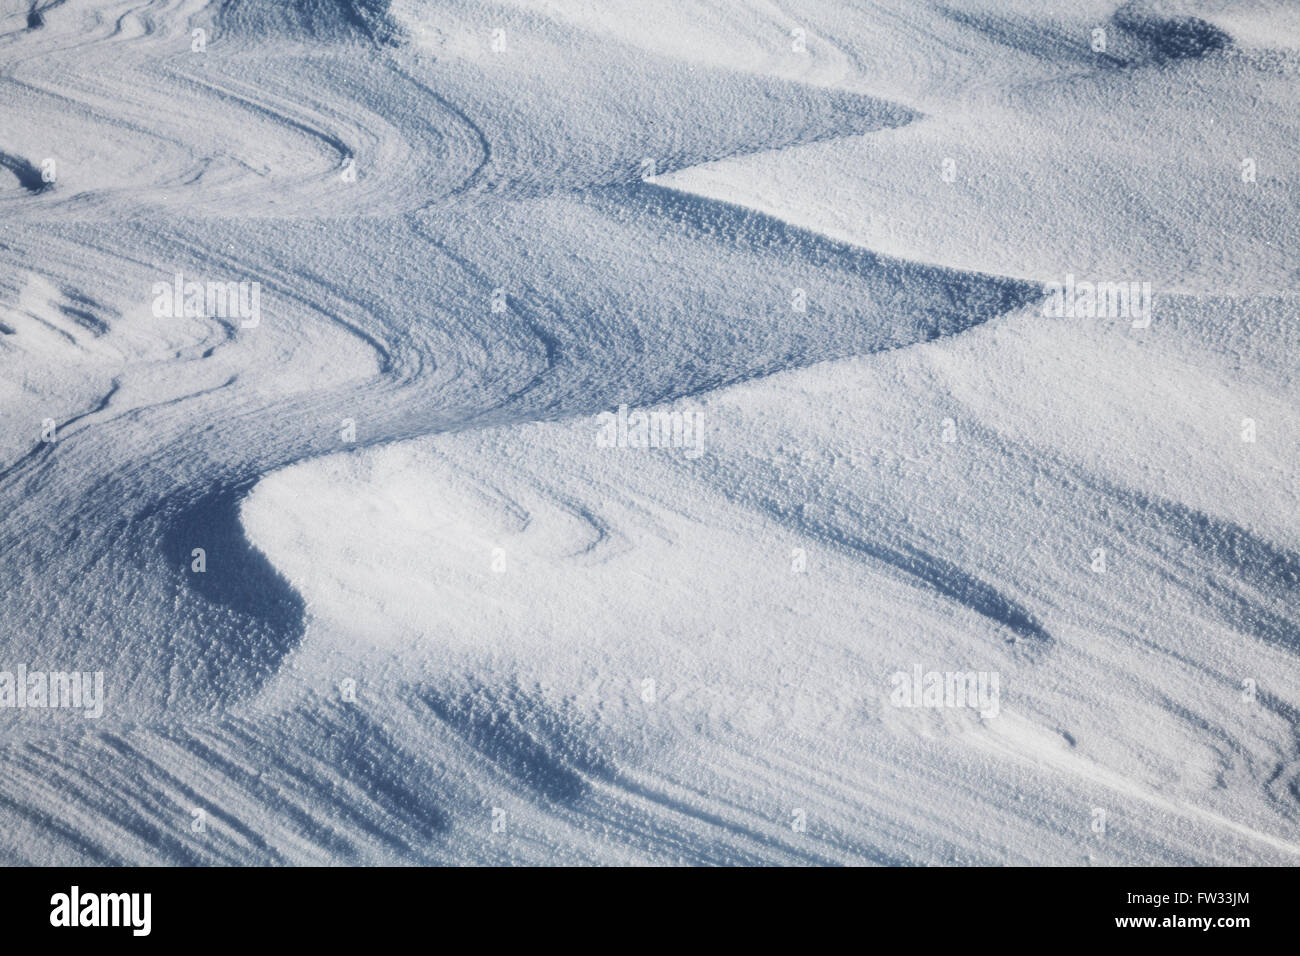 Des congères, des structures dans la neige en hiver, Feldberg, Forêt Noire, Bade-Wurtemberg, Allemagne Banque D'Images